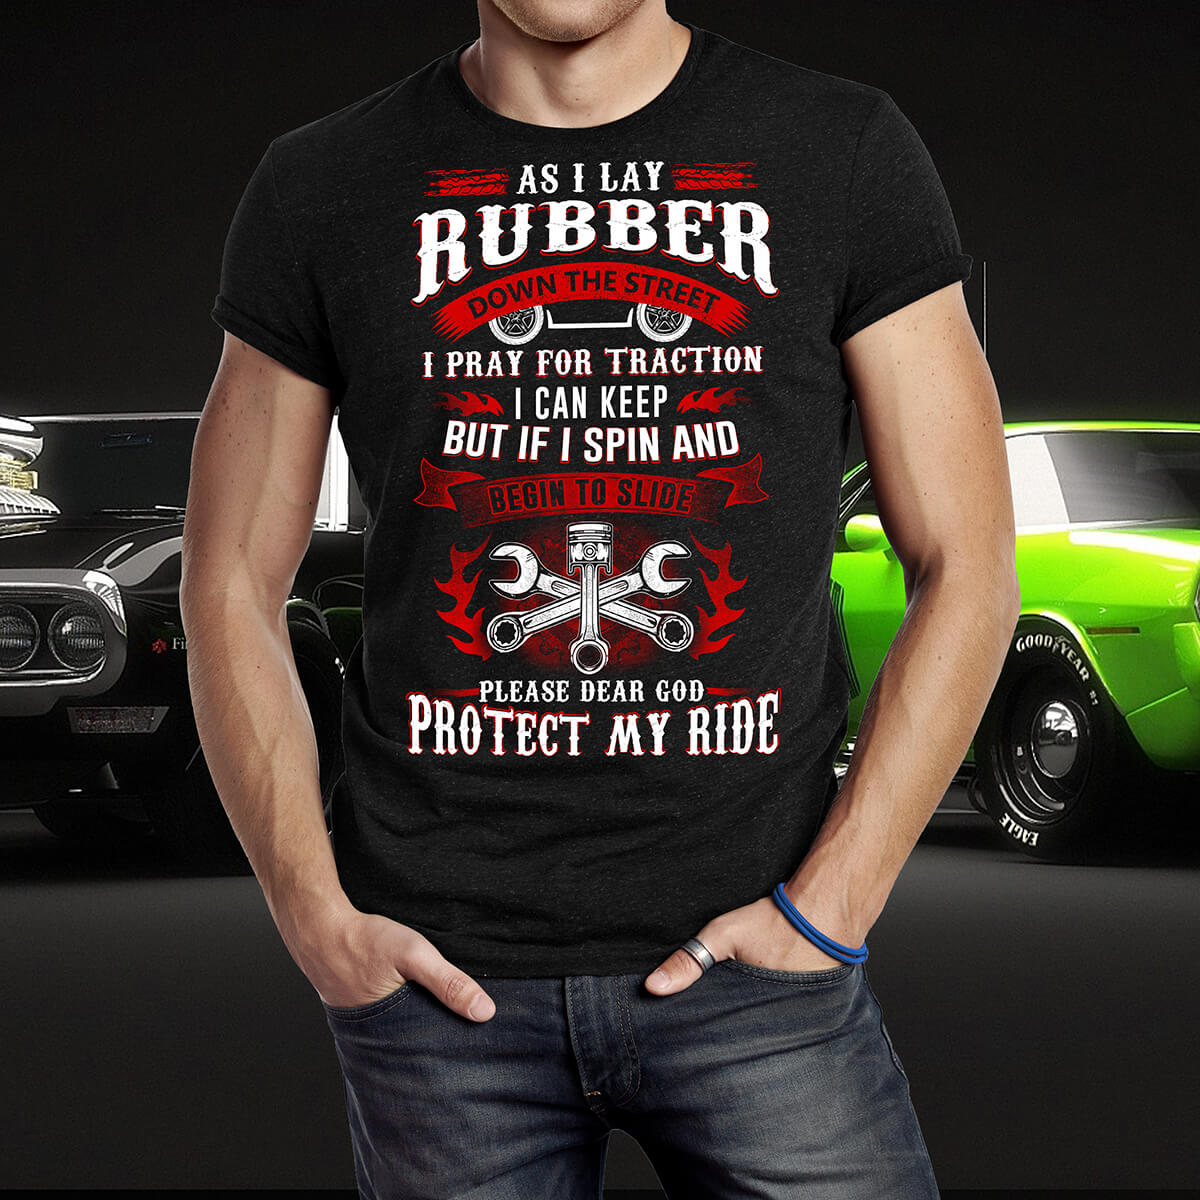 Please dear God protect my ride T-shirt